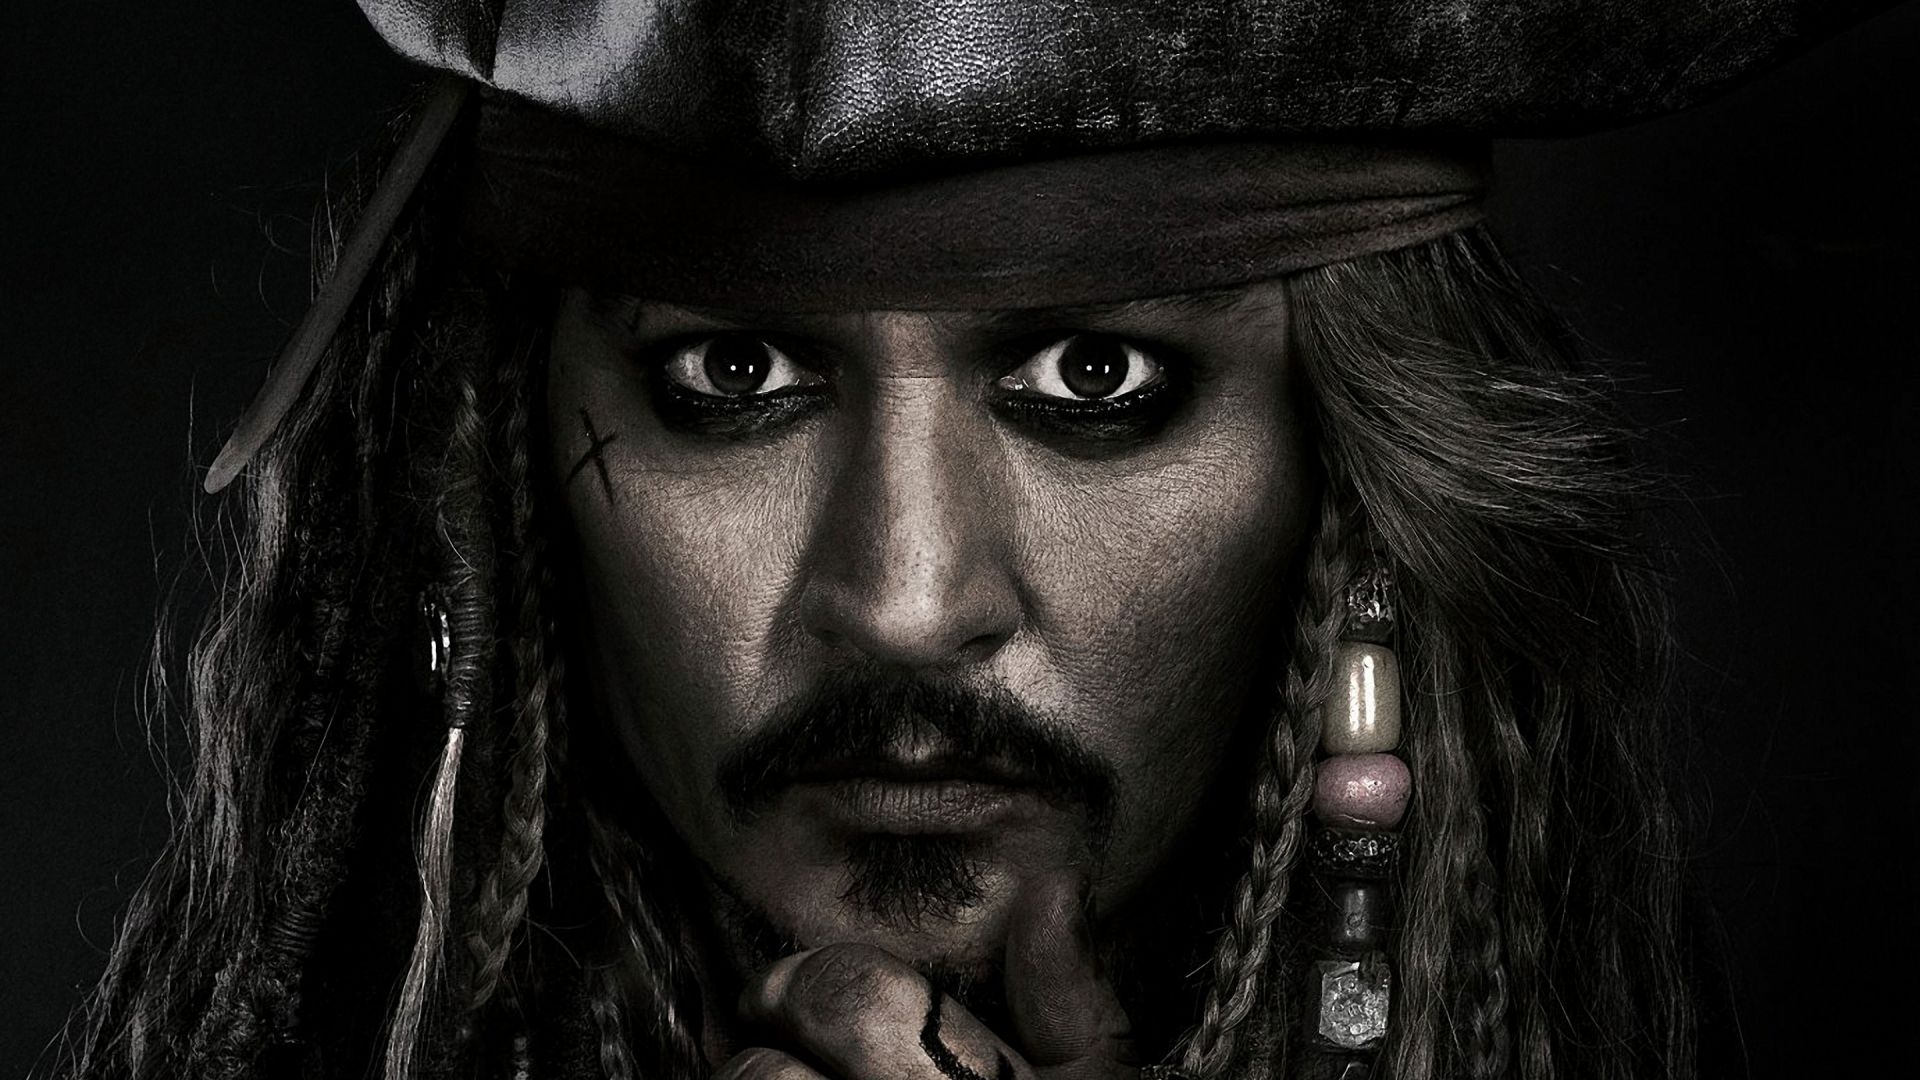 Desktop Wallpaper Jack Sparrow Johnny Depp Pirates Movie Hd Image Picture Background Ijnxmr